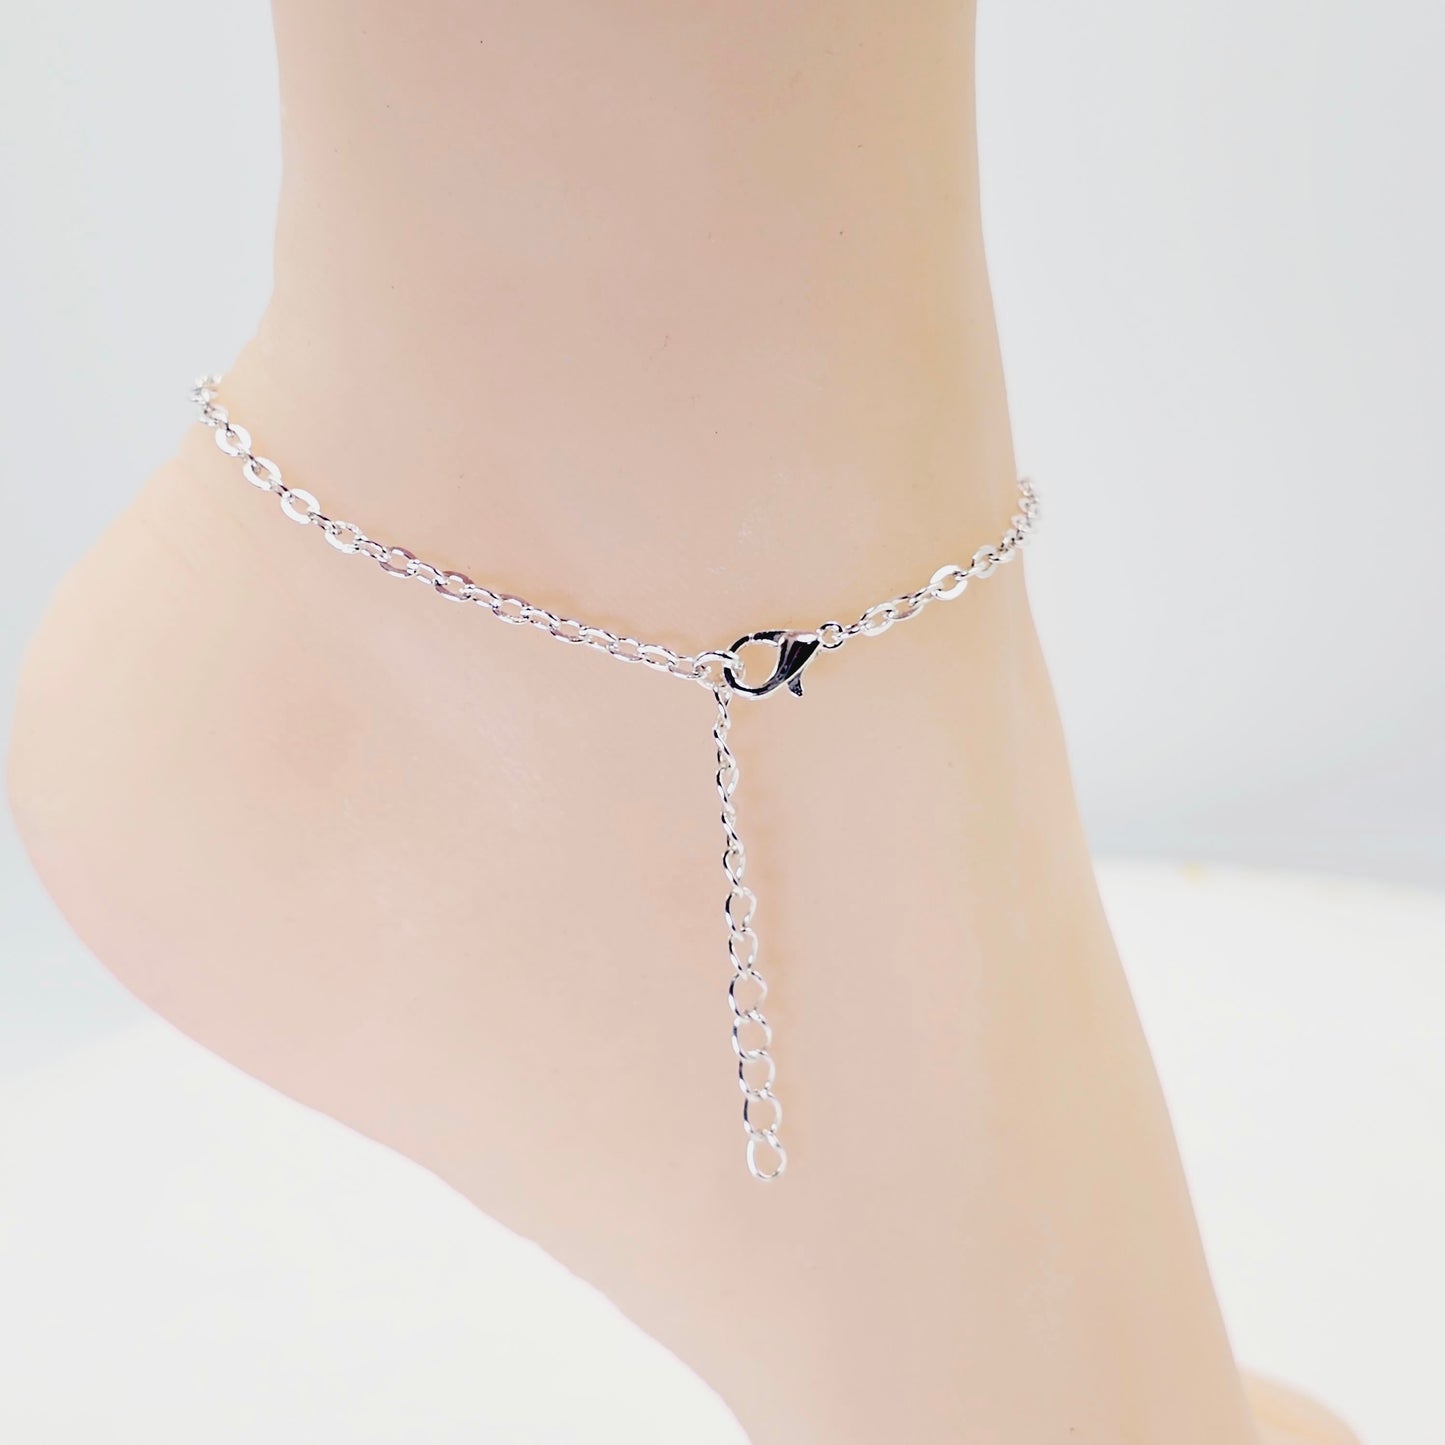 Silver Circle of O Anklet. Minimalist, BDSM, Ankle Bracelet for Submissive, DDLG, Slave, Discreet Collar